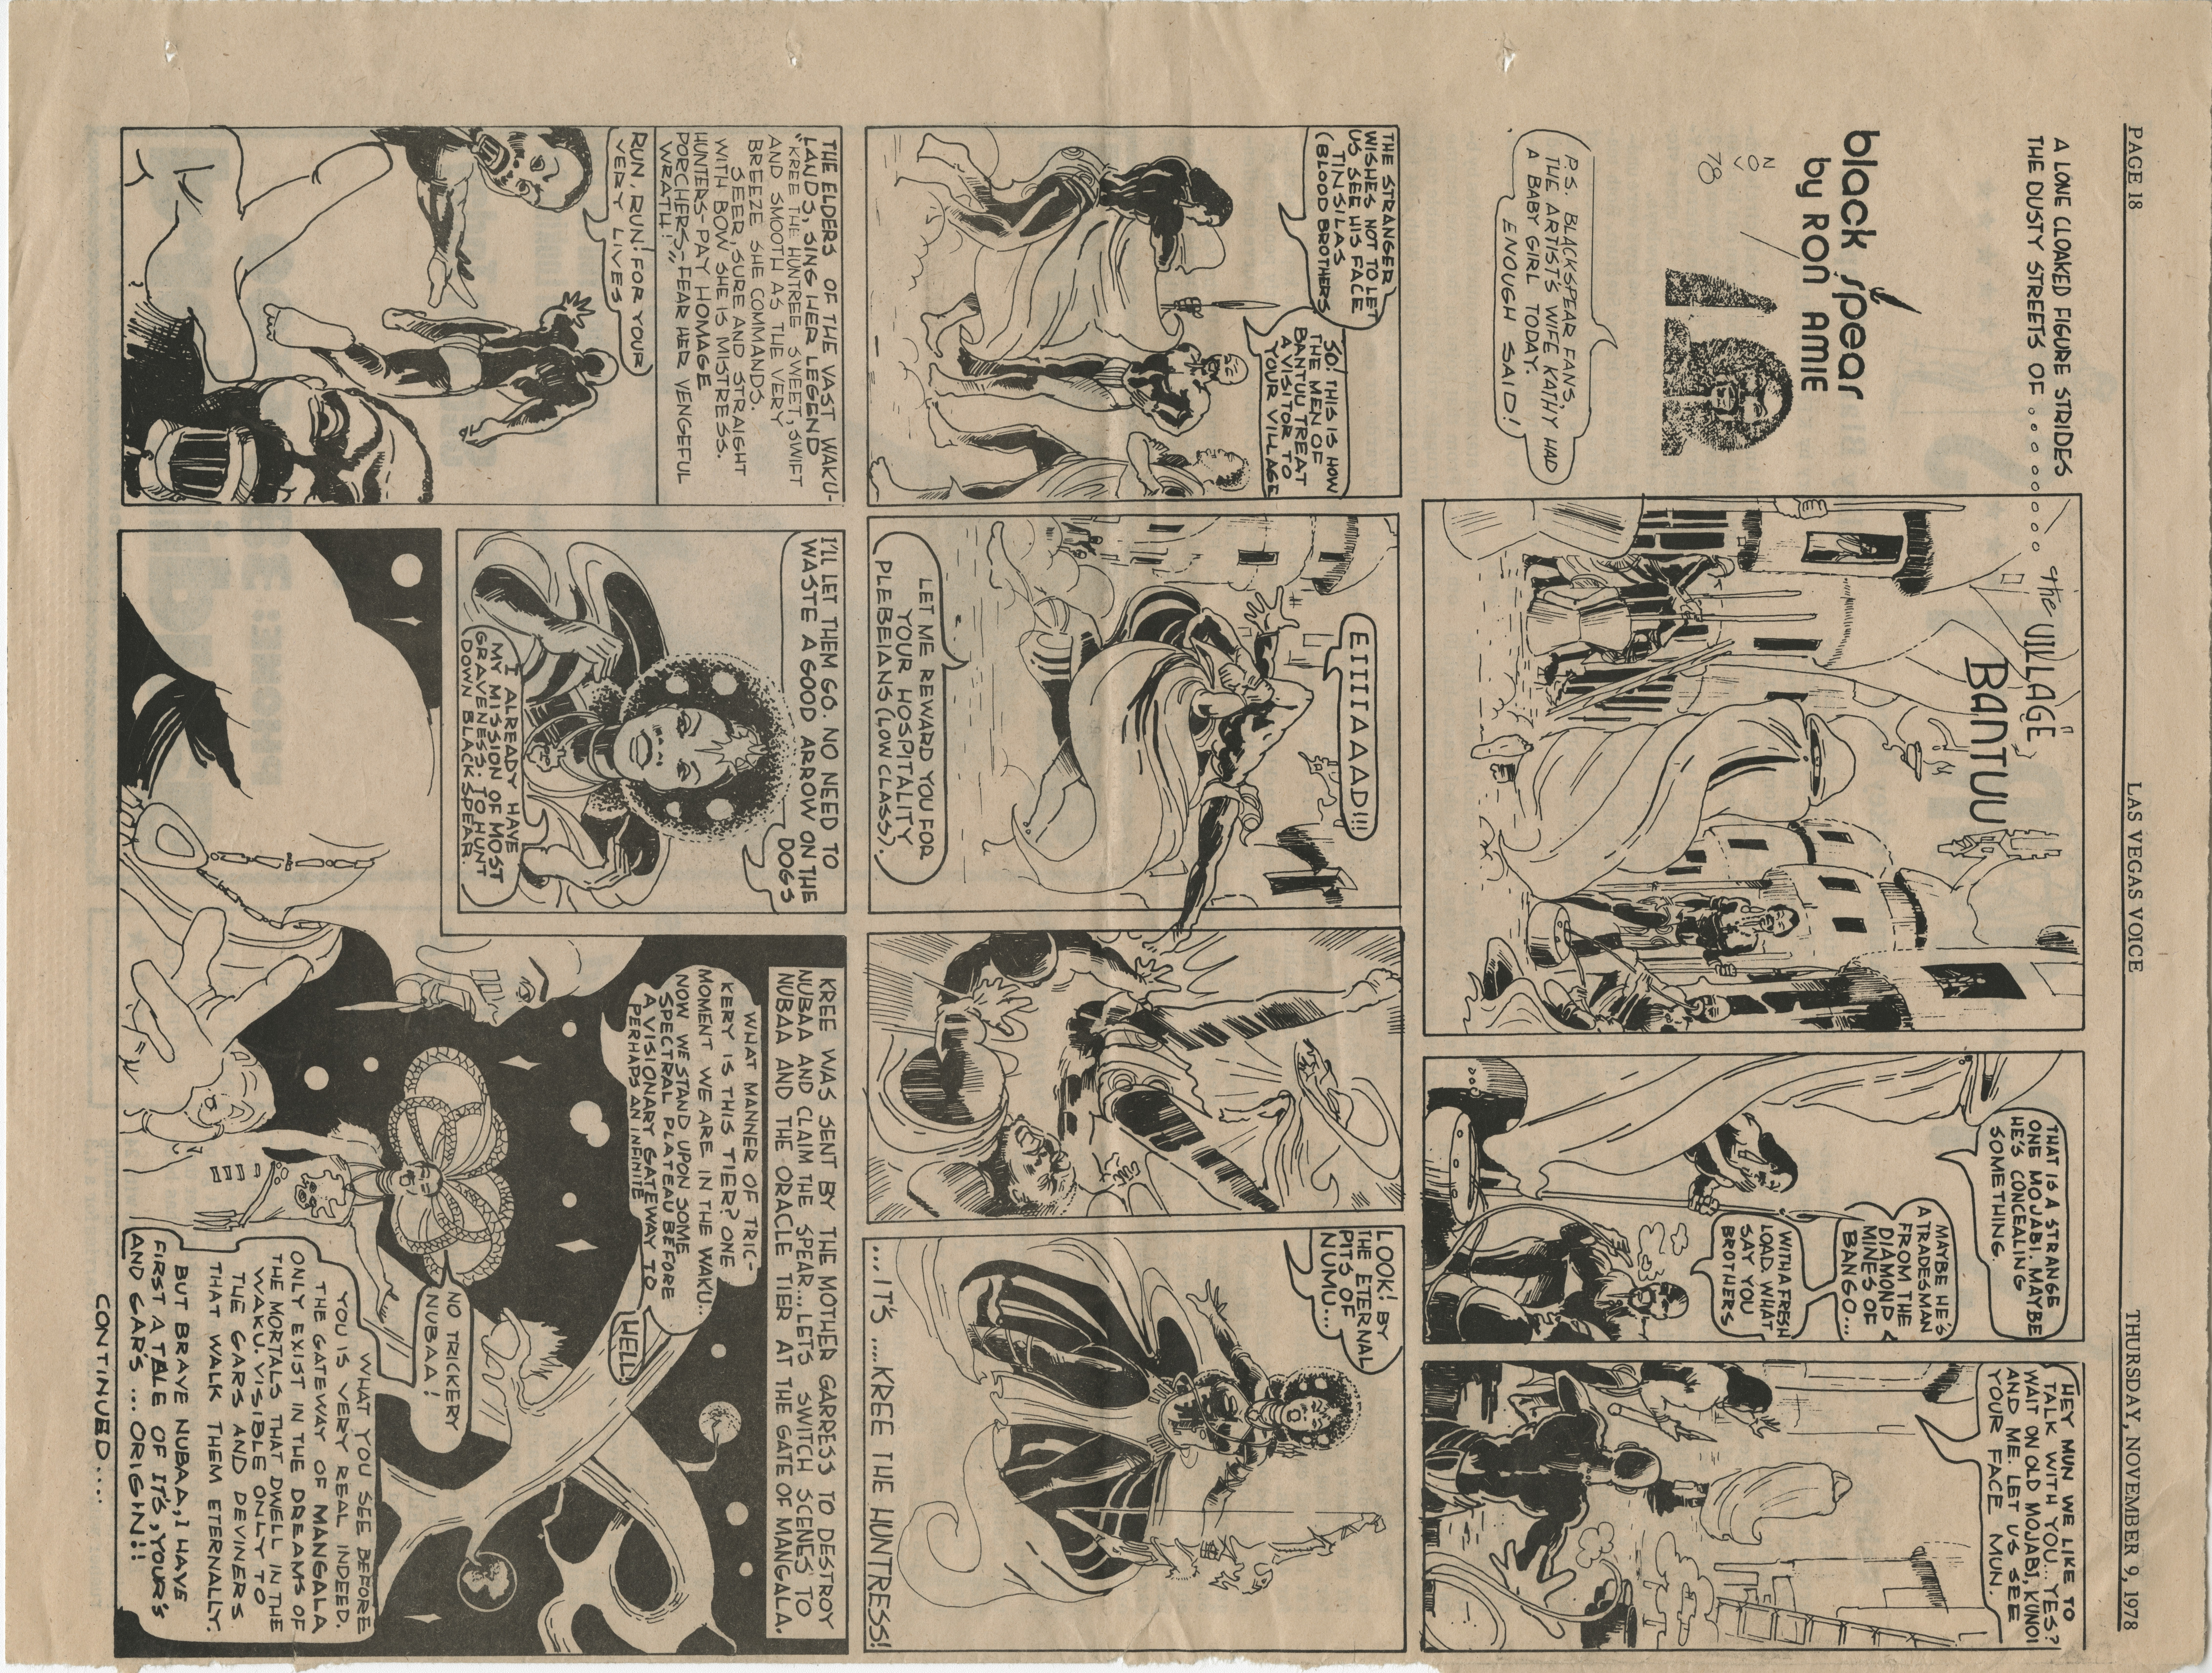 Newspaper clipping, Black Spear cartoon by Ron Amie, Las Vegas Voice, November 9, 1978